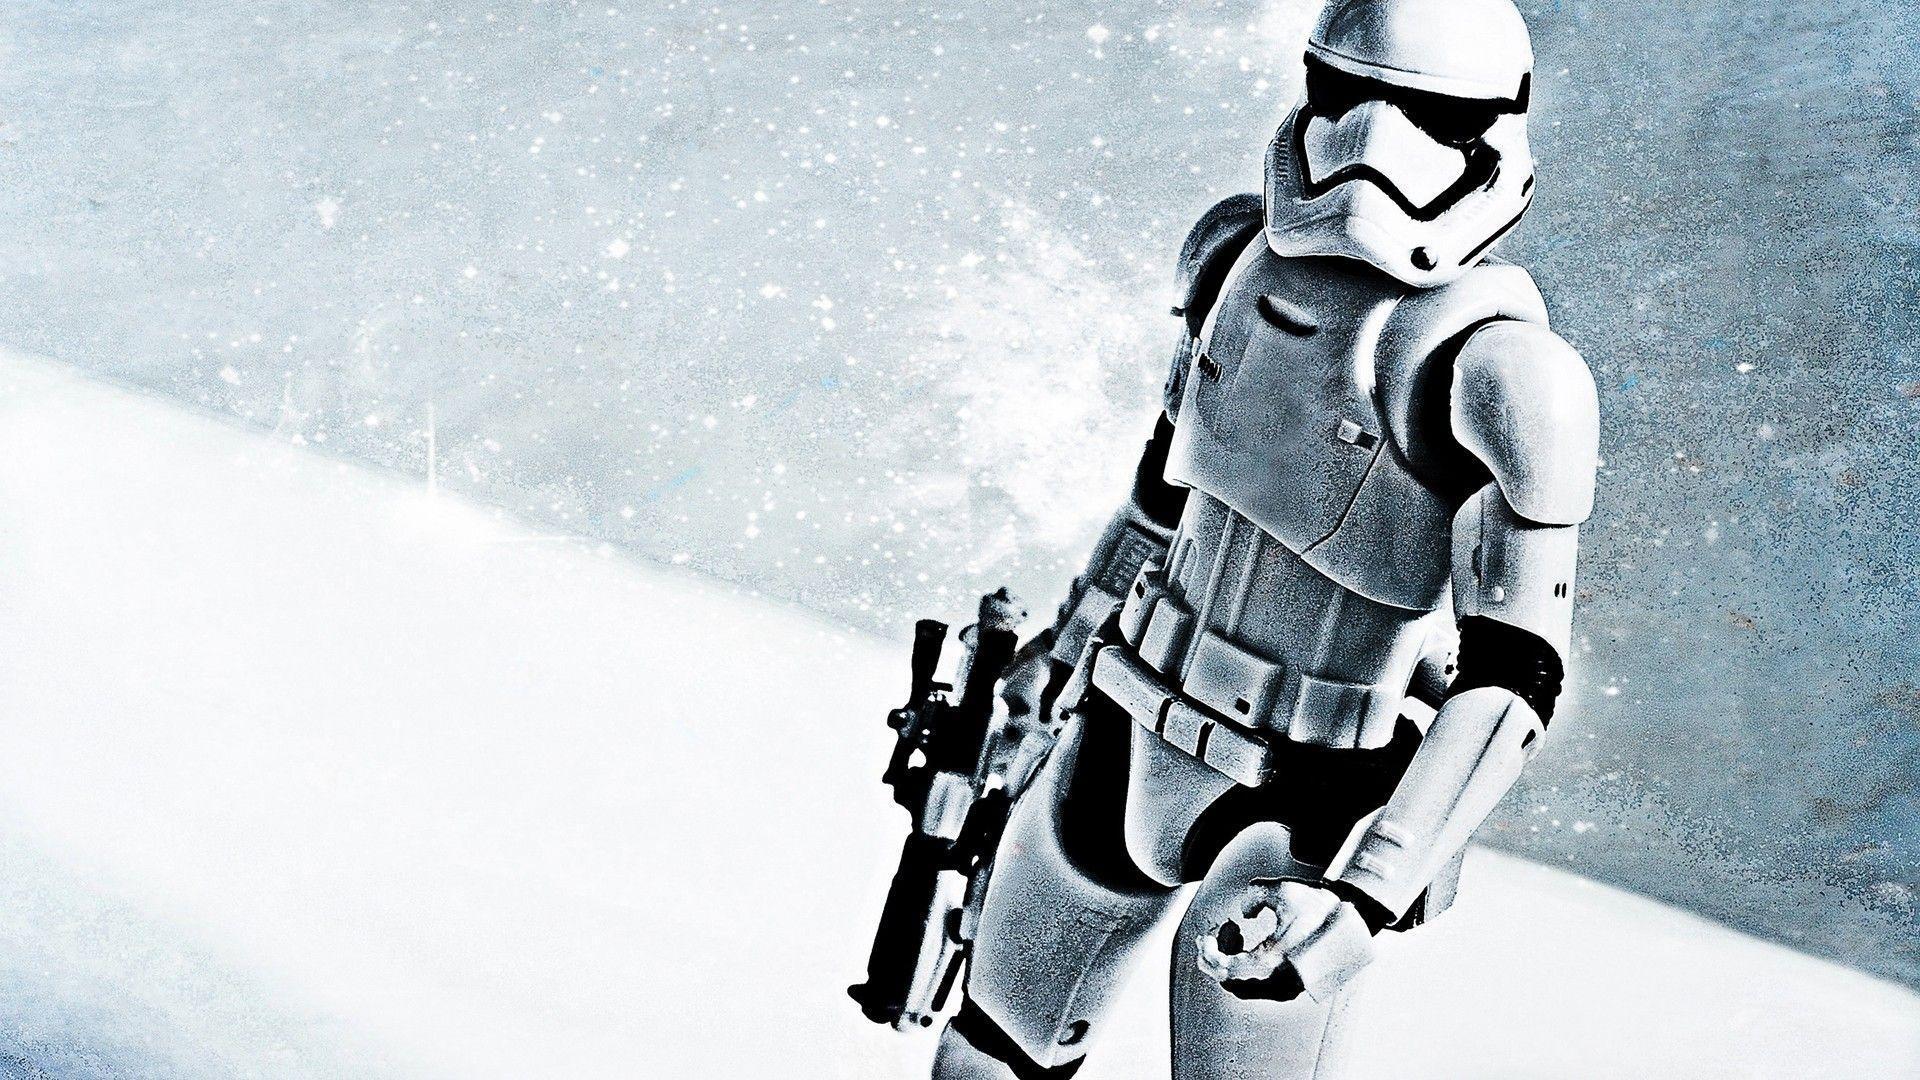 stormtrooper, #Star Wars, #Star Wars: The Force Awakens, #gun